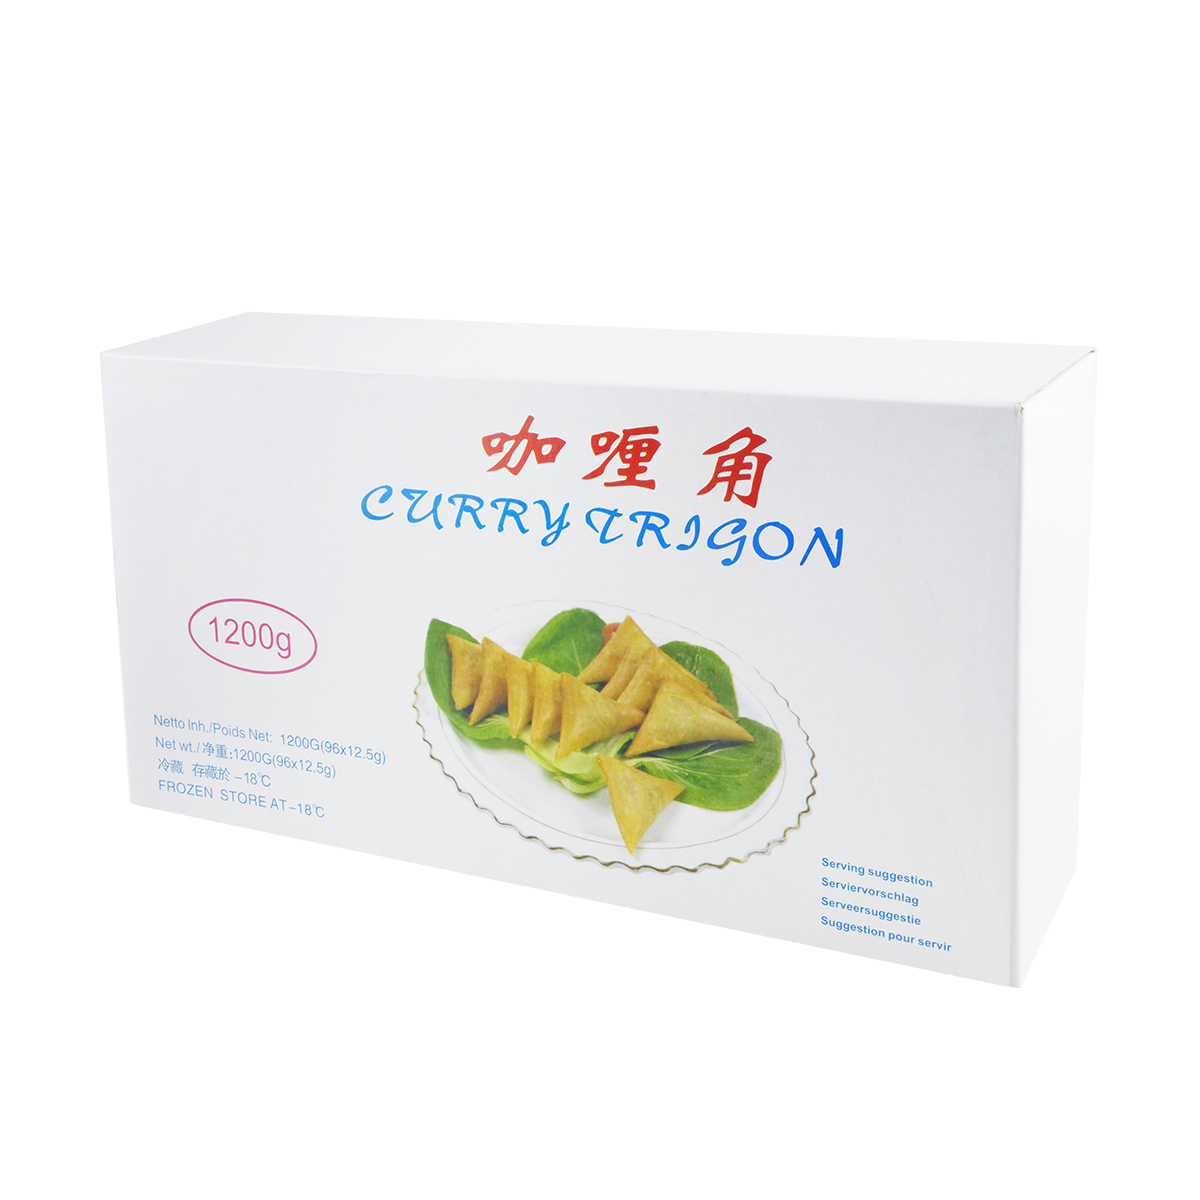 Exclusiv in magazine - Curry samosa TSINGTAO (96x12.5g) 1.2kg
, asianfood.ro